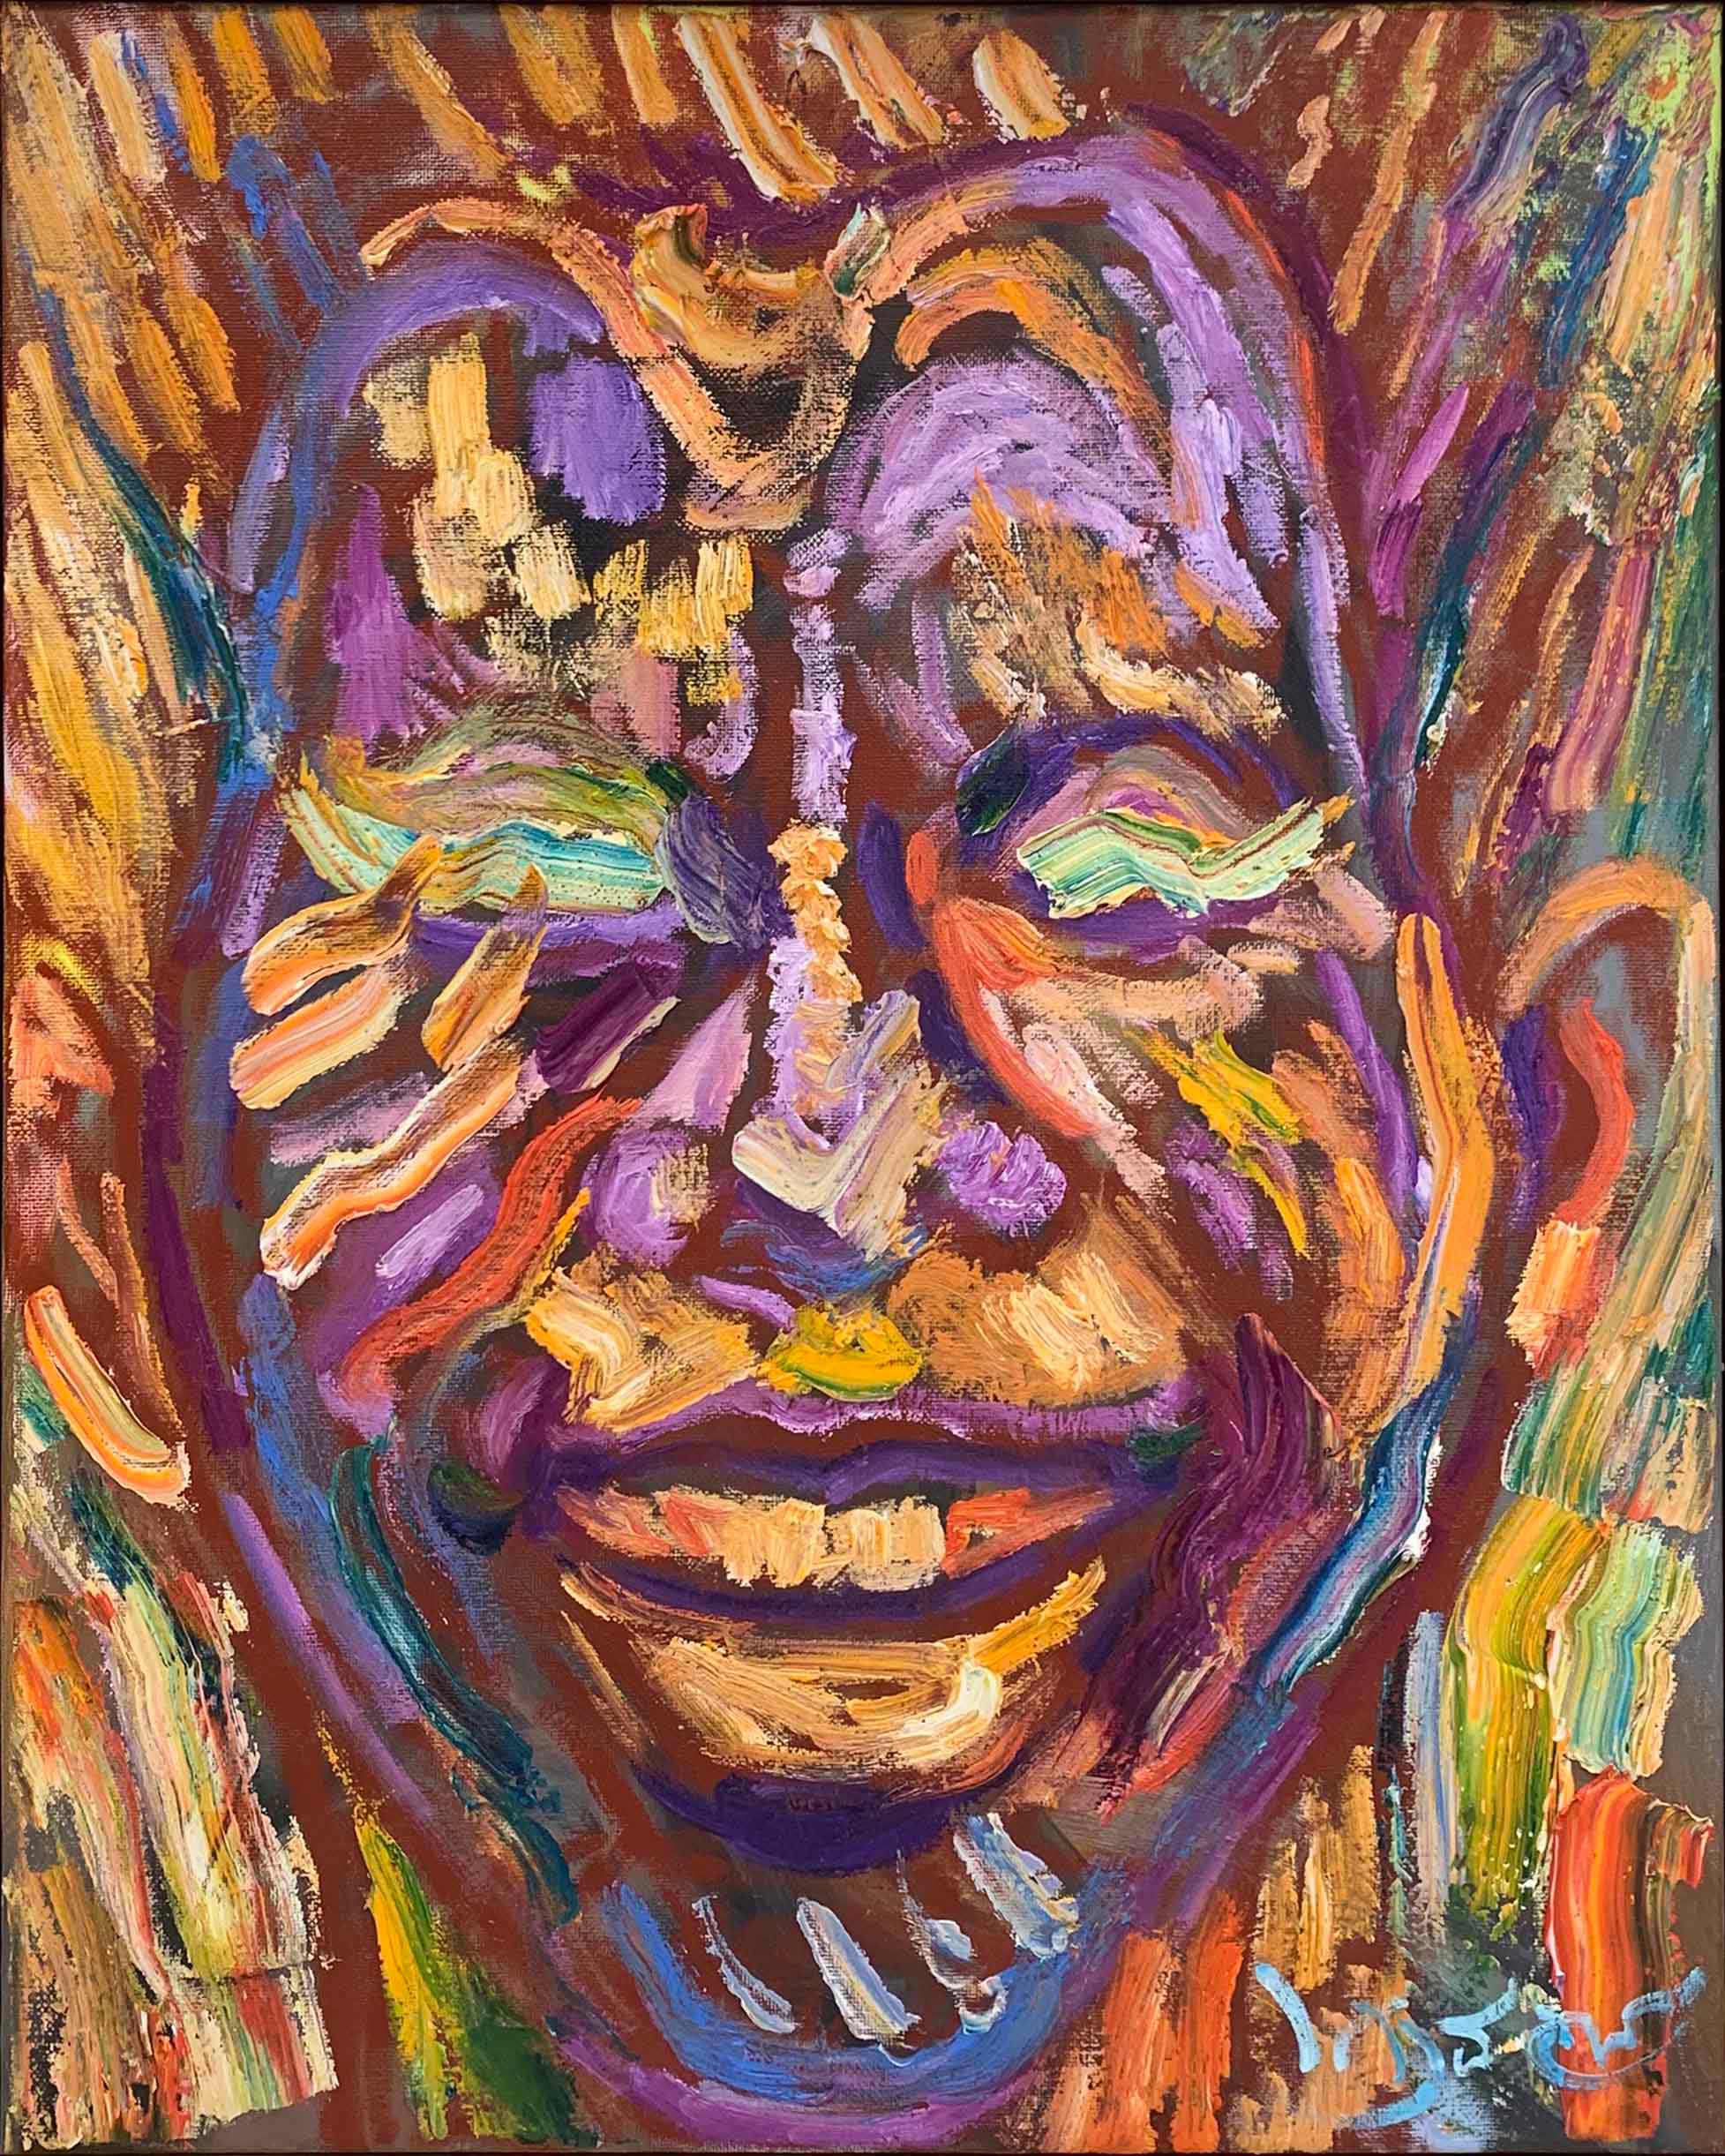 Self portrait (Warawut Intorn | วรวุฒิ อินทร)